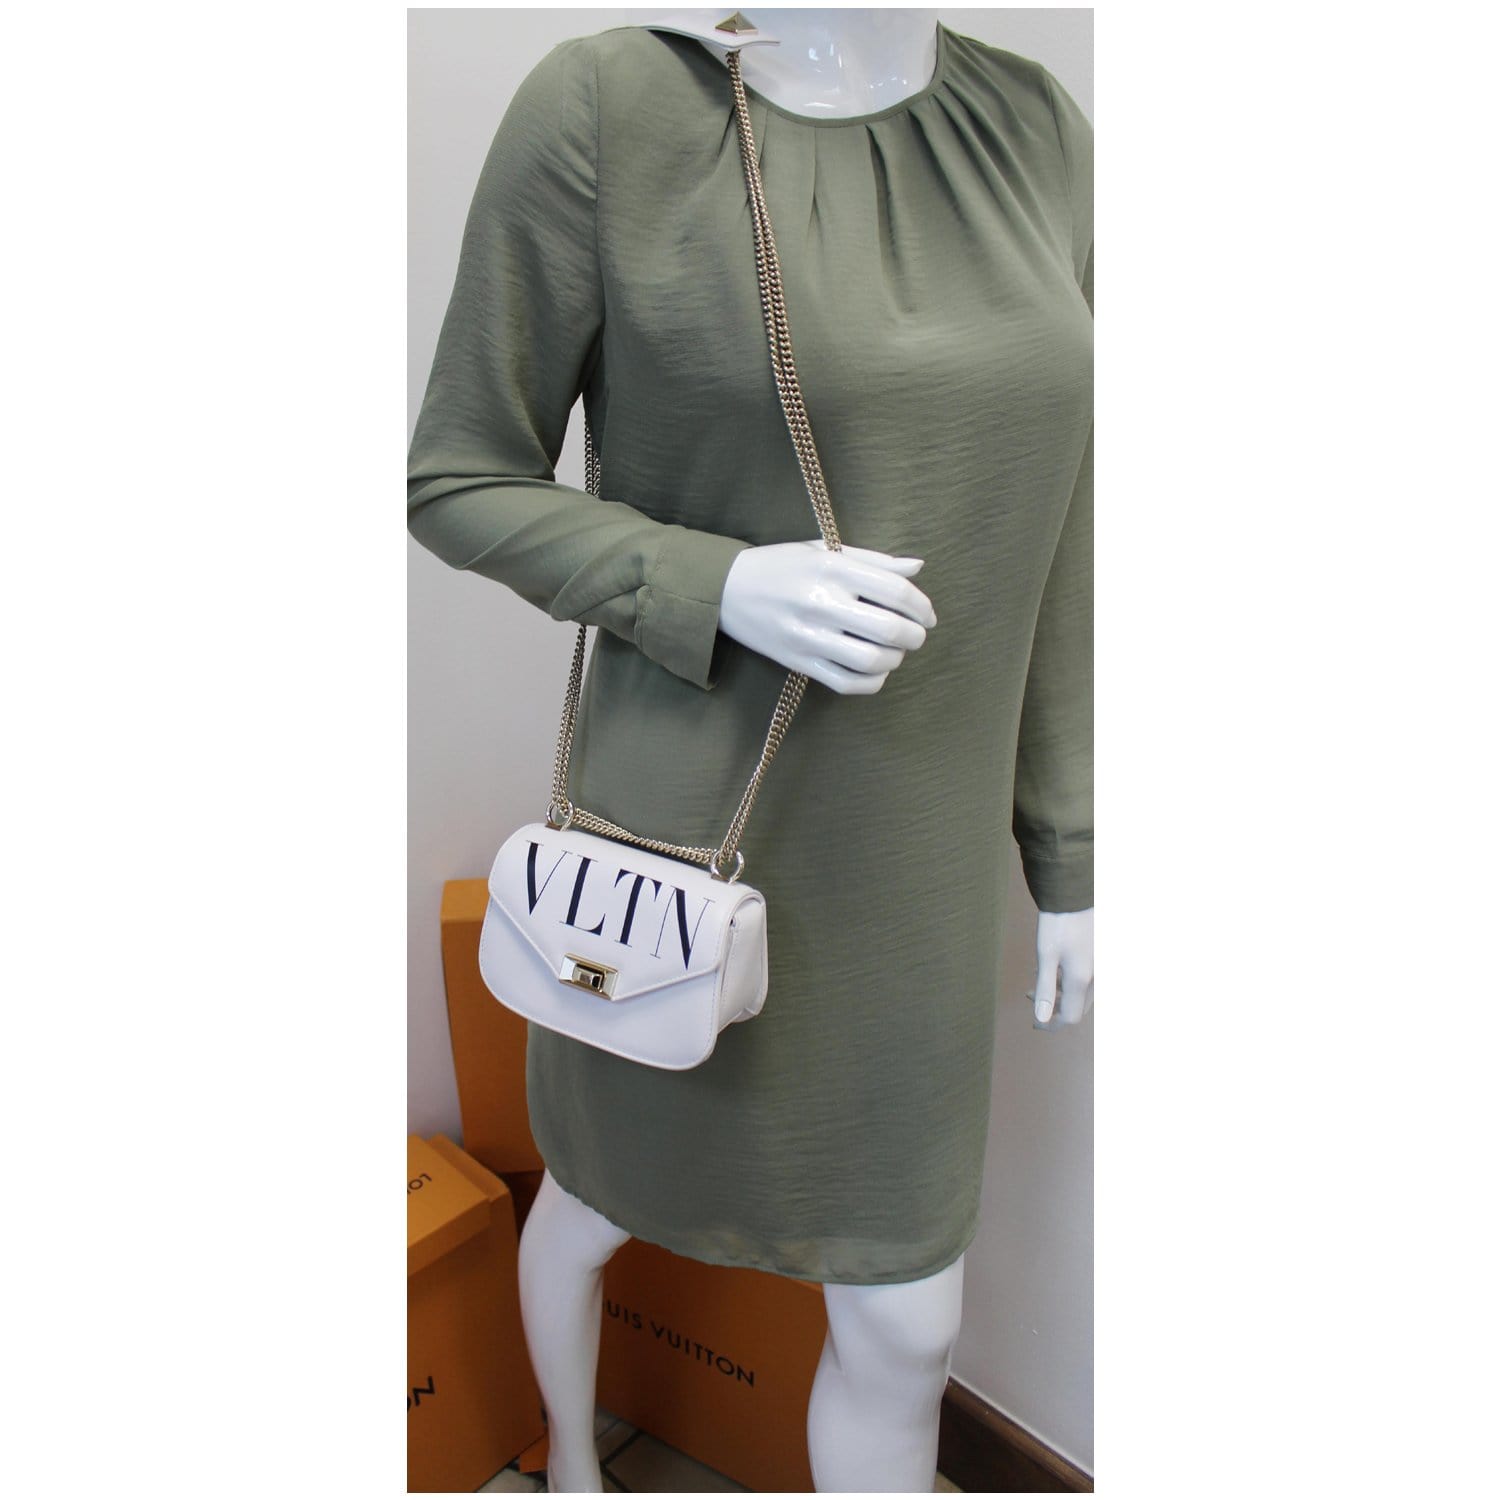 Valentino Garavani - V-logo Leather Cross-body Wallet Bag - Womens - Chartreuse